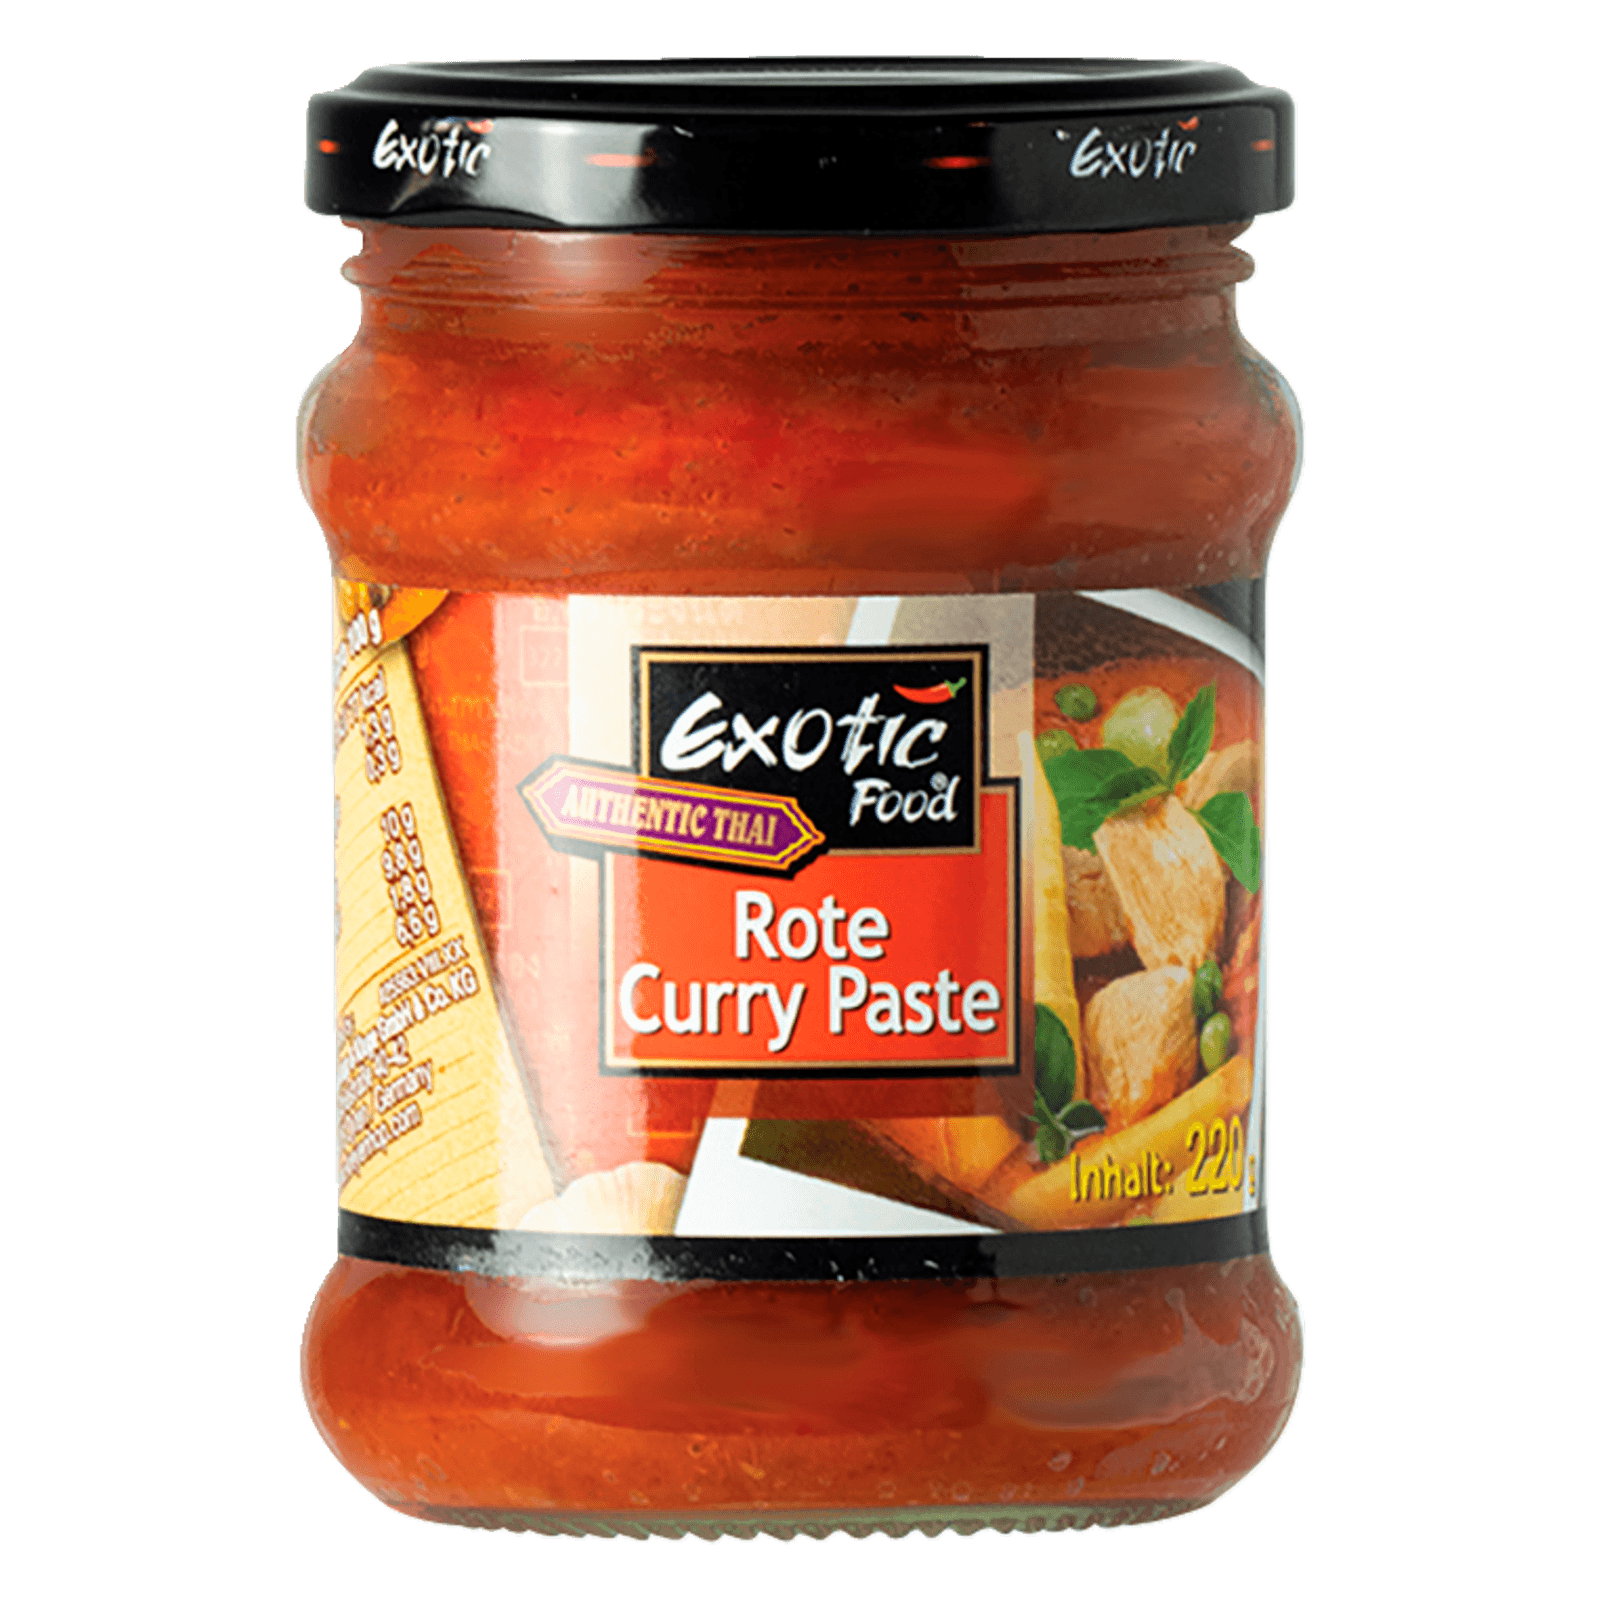 Exotic Food Rote Curry Paste 220g bei REWE online bestellen!